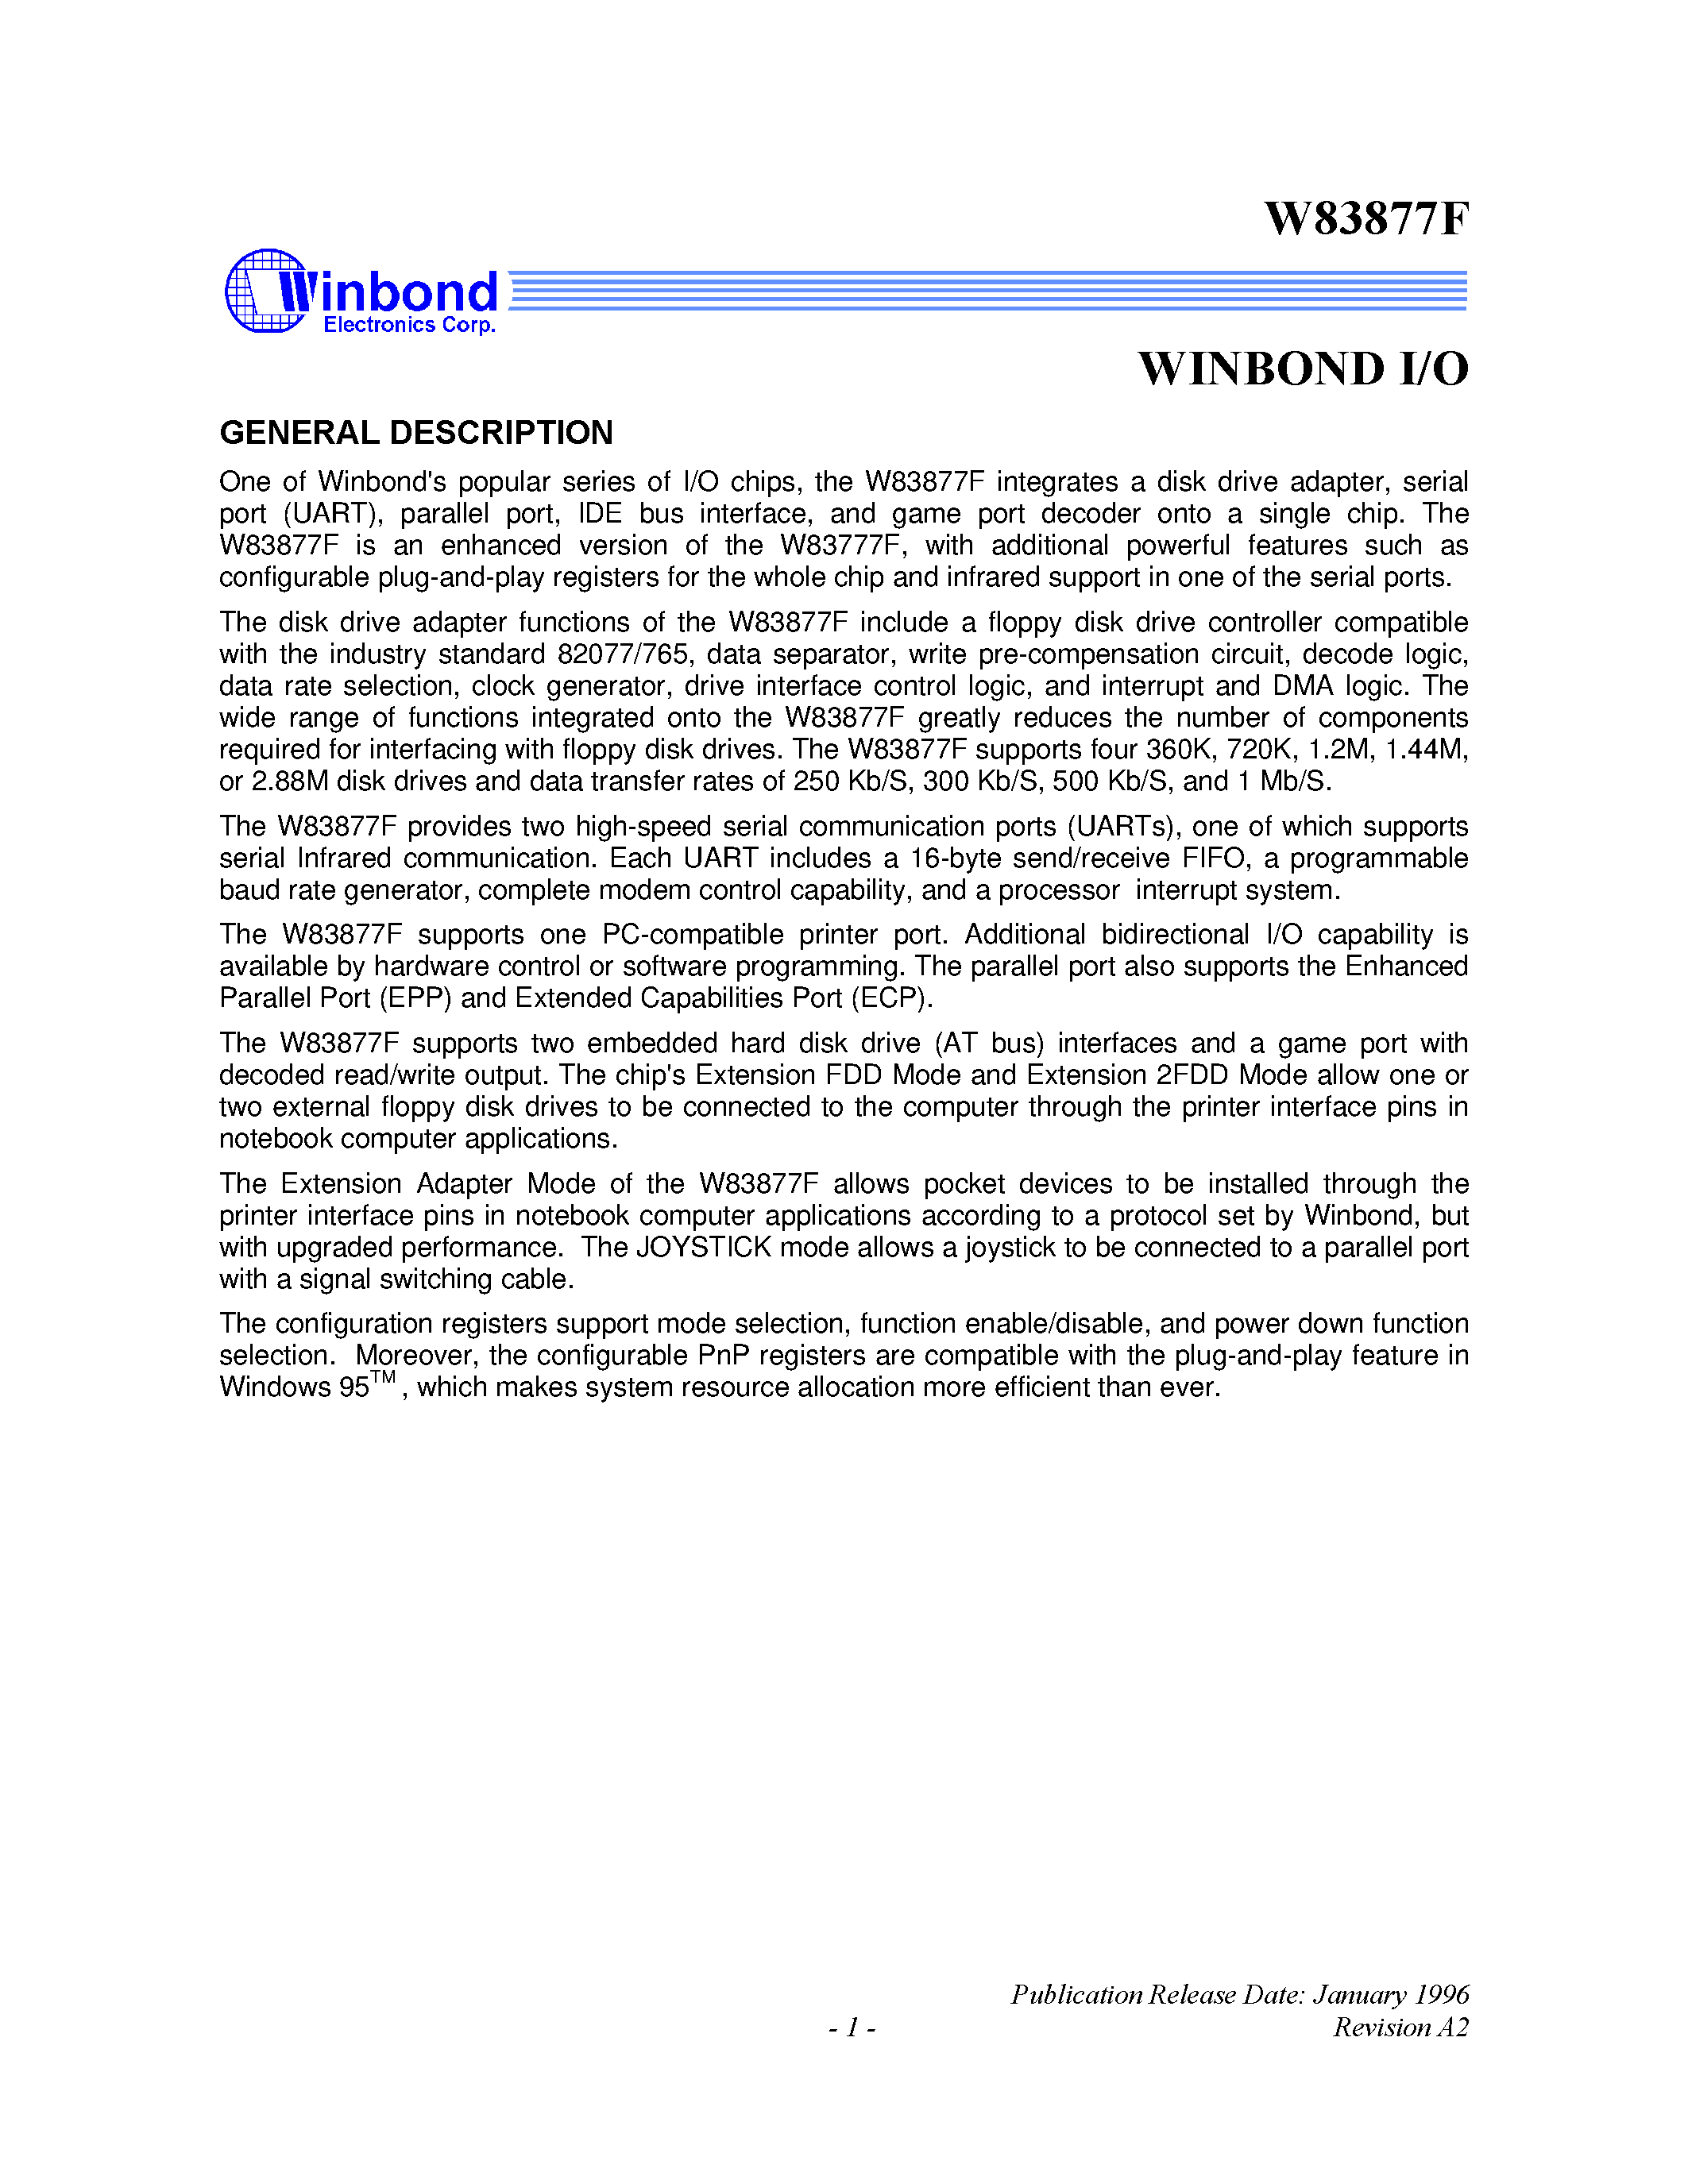 Datasheet W83877F - WINBOND I/O page 1